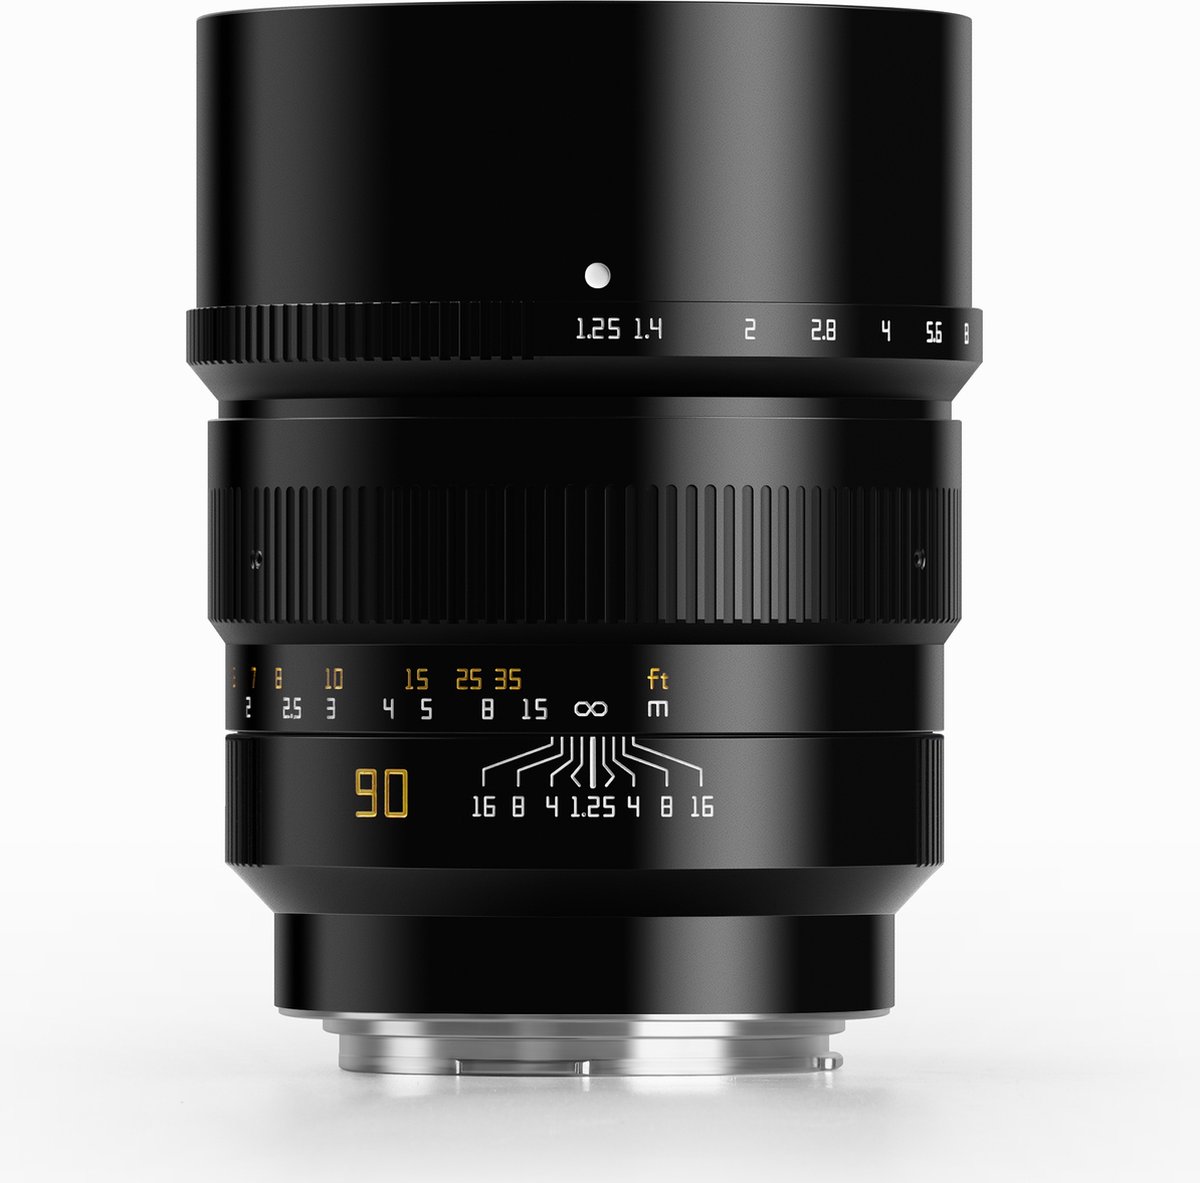 TT Artisan – Cameralens – 90mm F1.25 Full Frame voor Canon RF-vatting, zwart